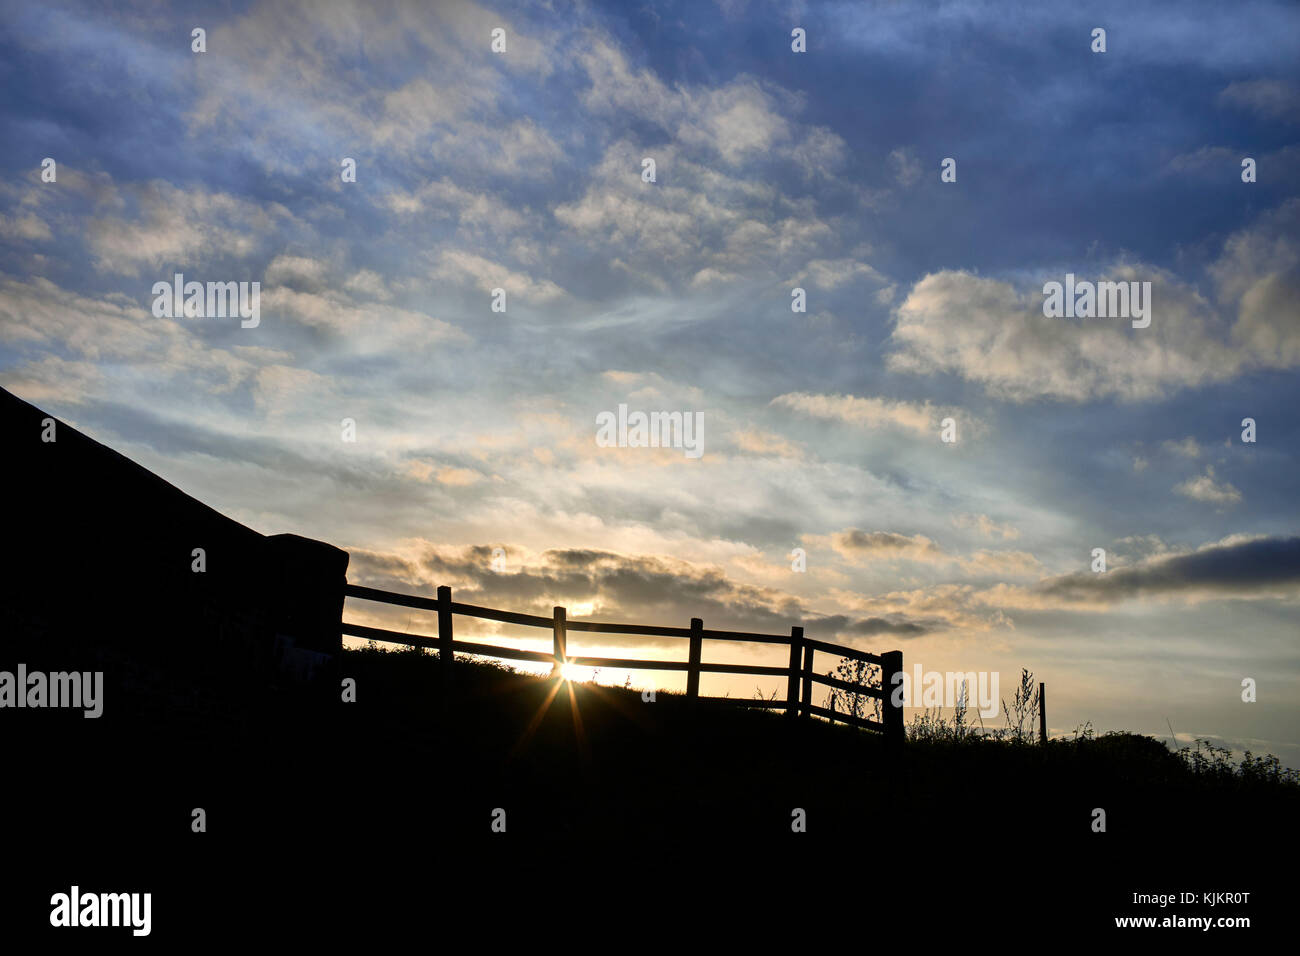 Setting sun behind a farm fence and a bridge Stock Photo